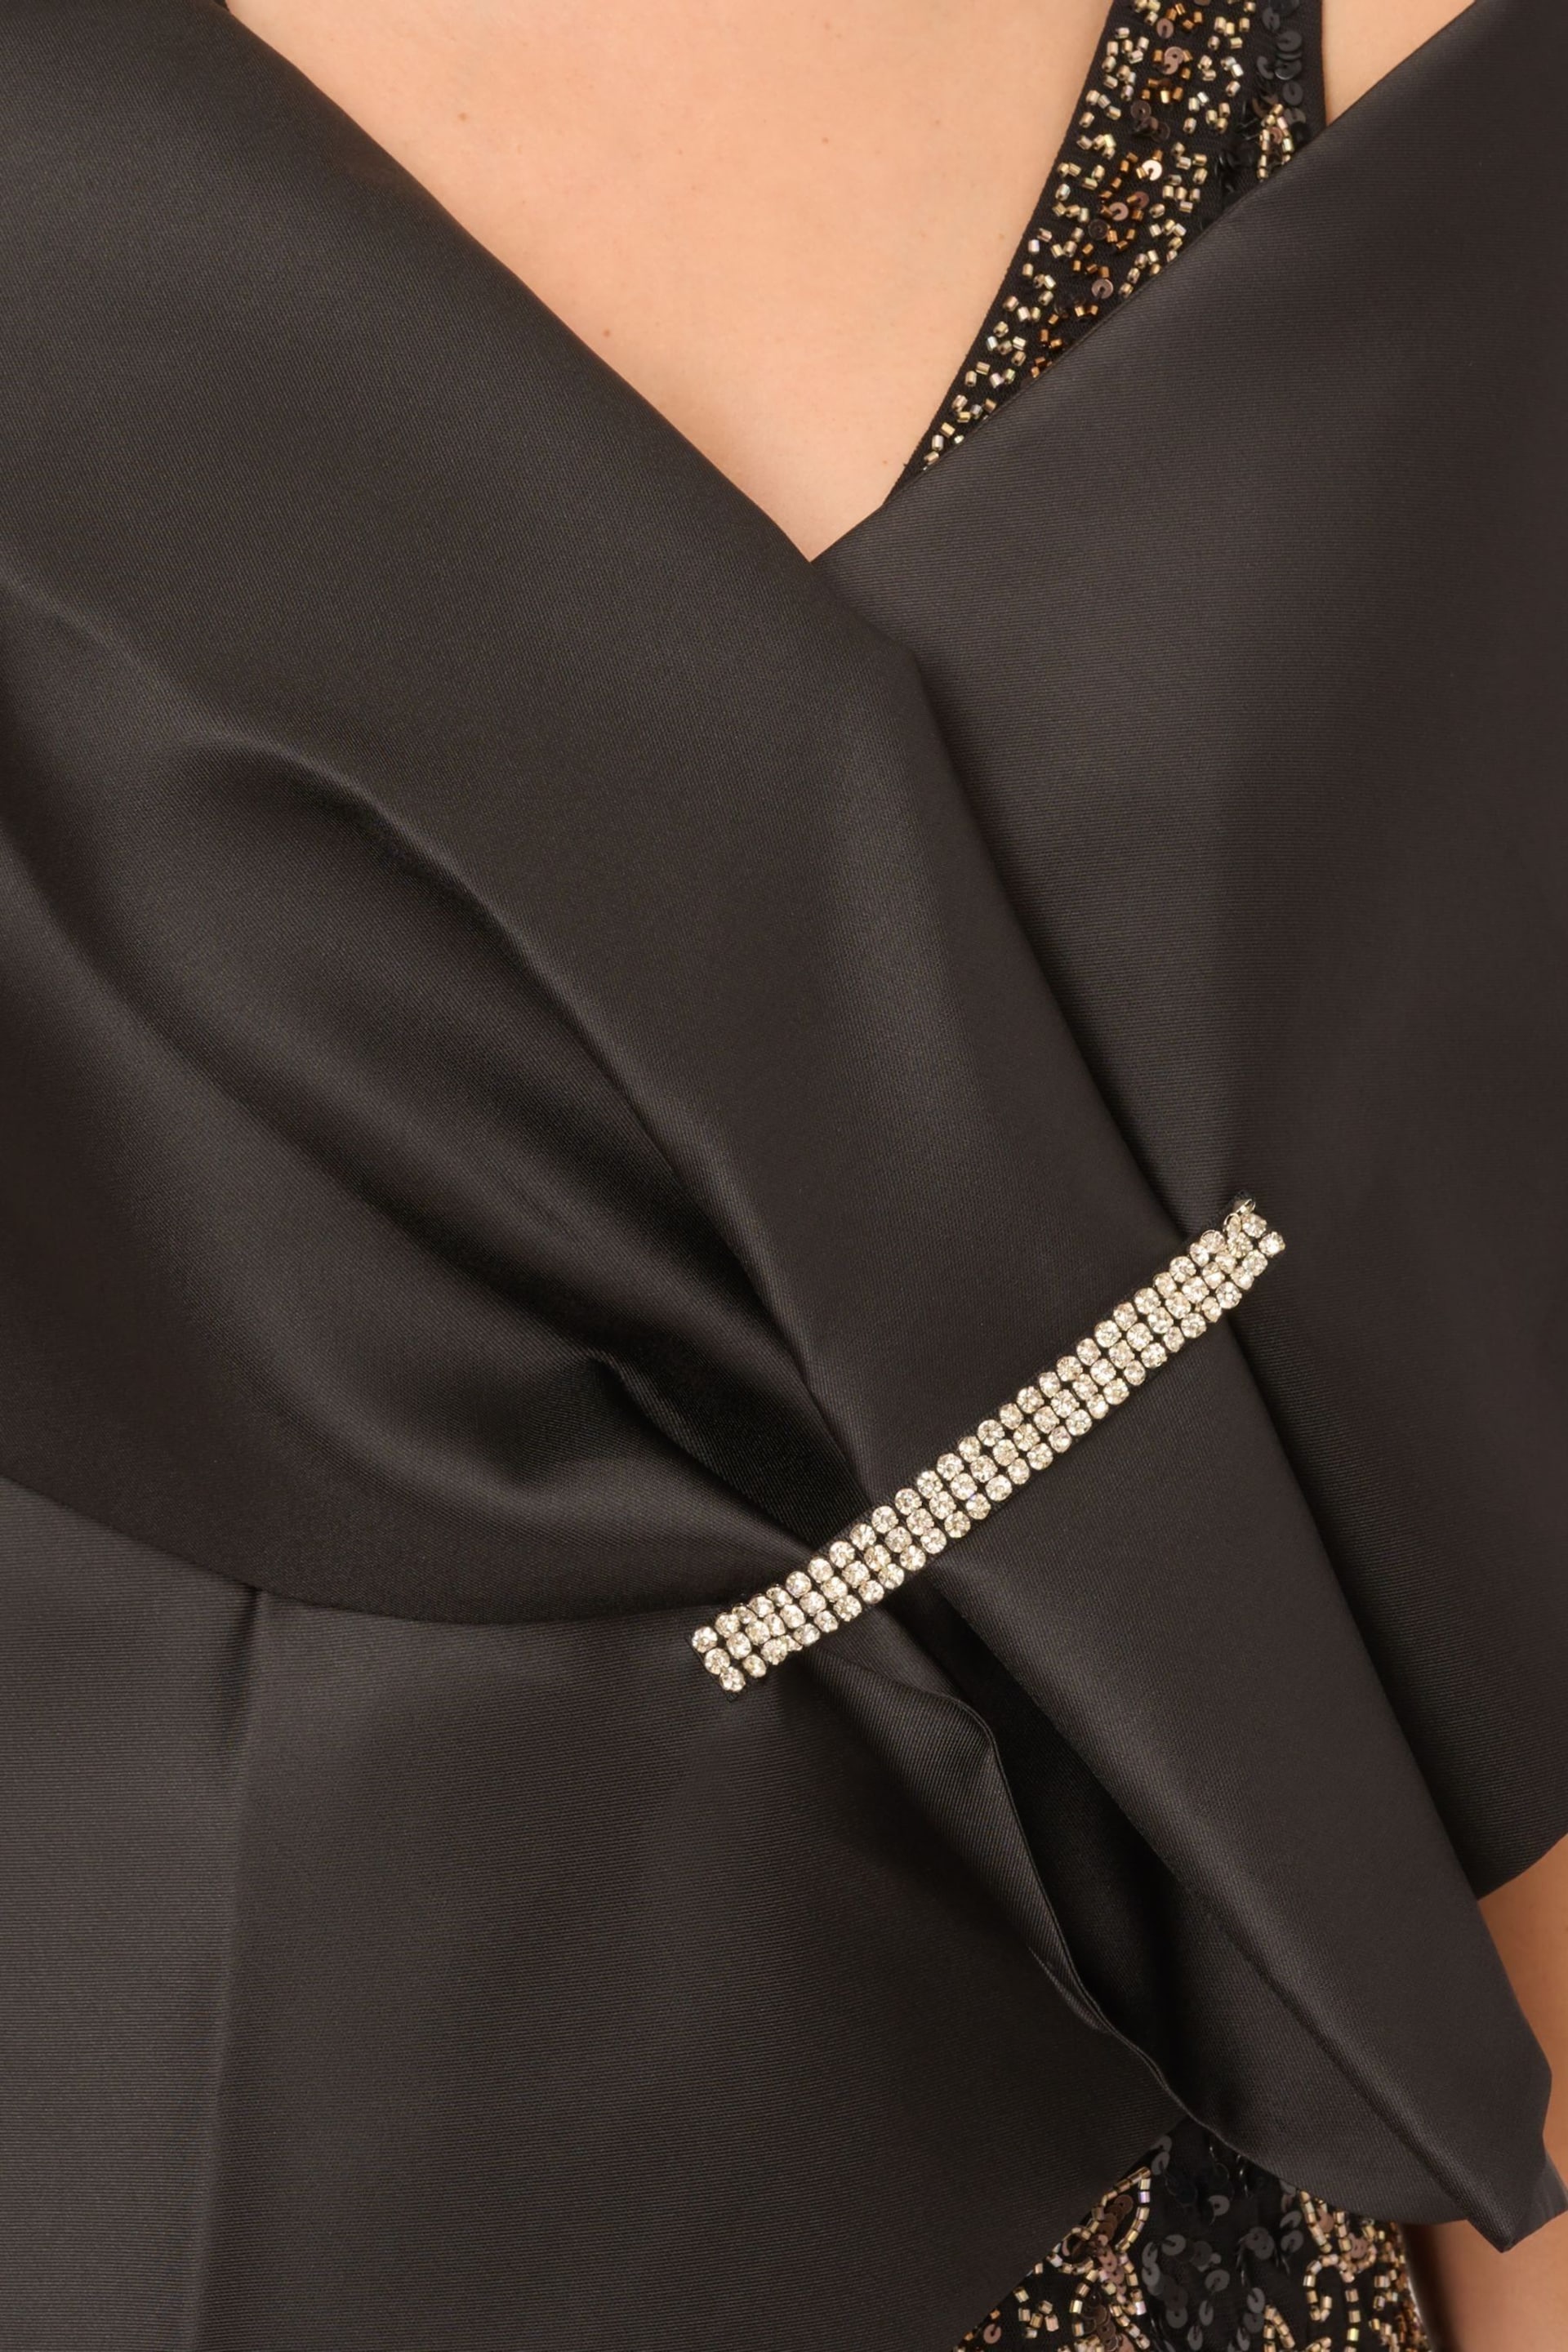 Adrianna Papell Mikado Embellished Wrap Black Poncho - Image 4 of 4